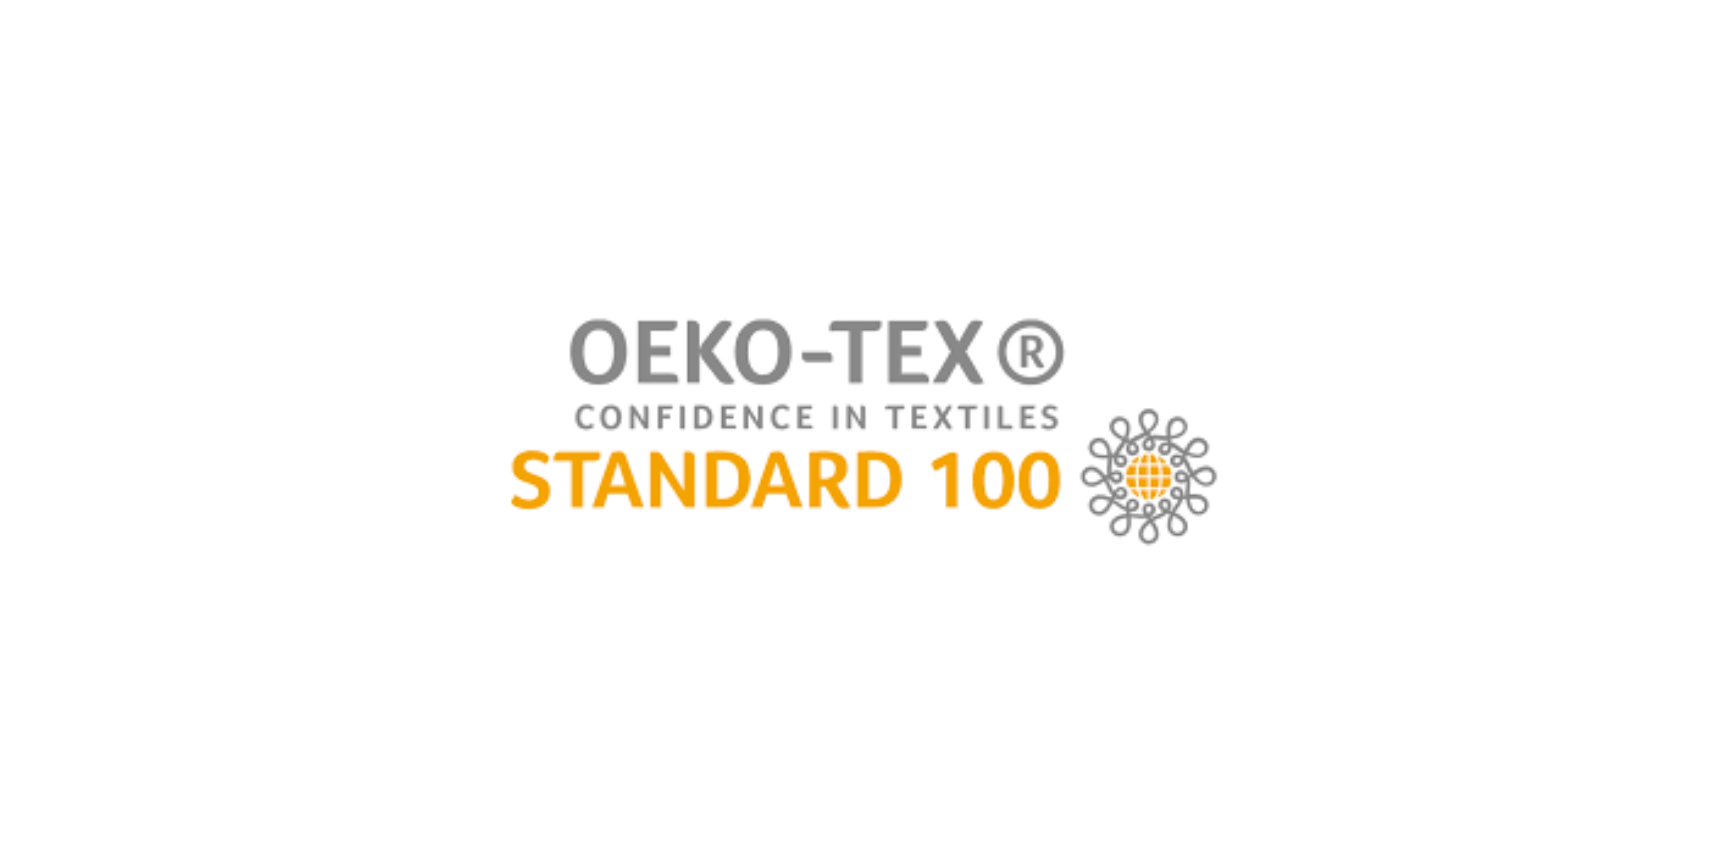  oeko-tex standard 100